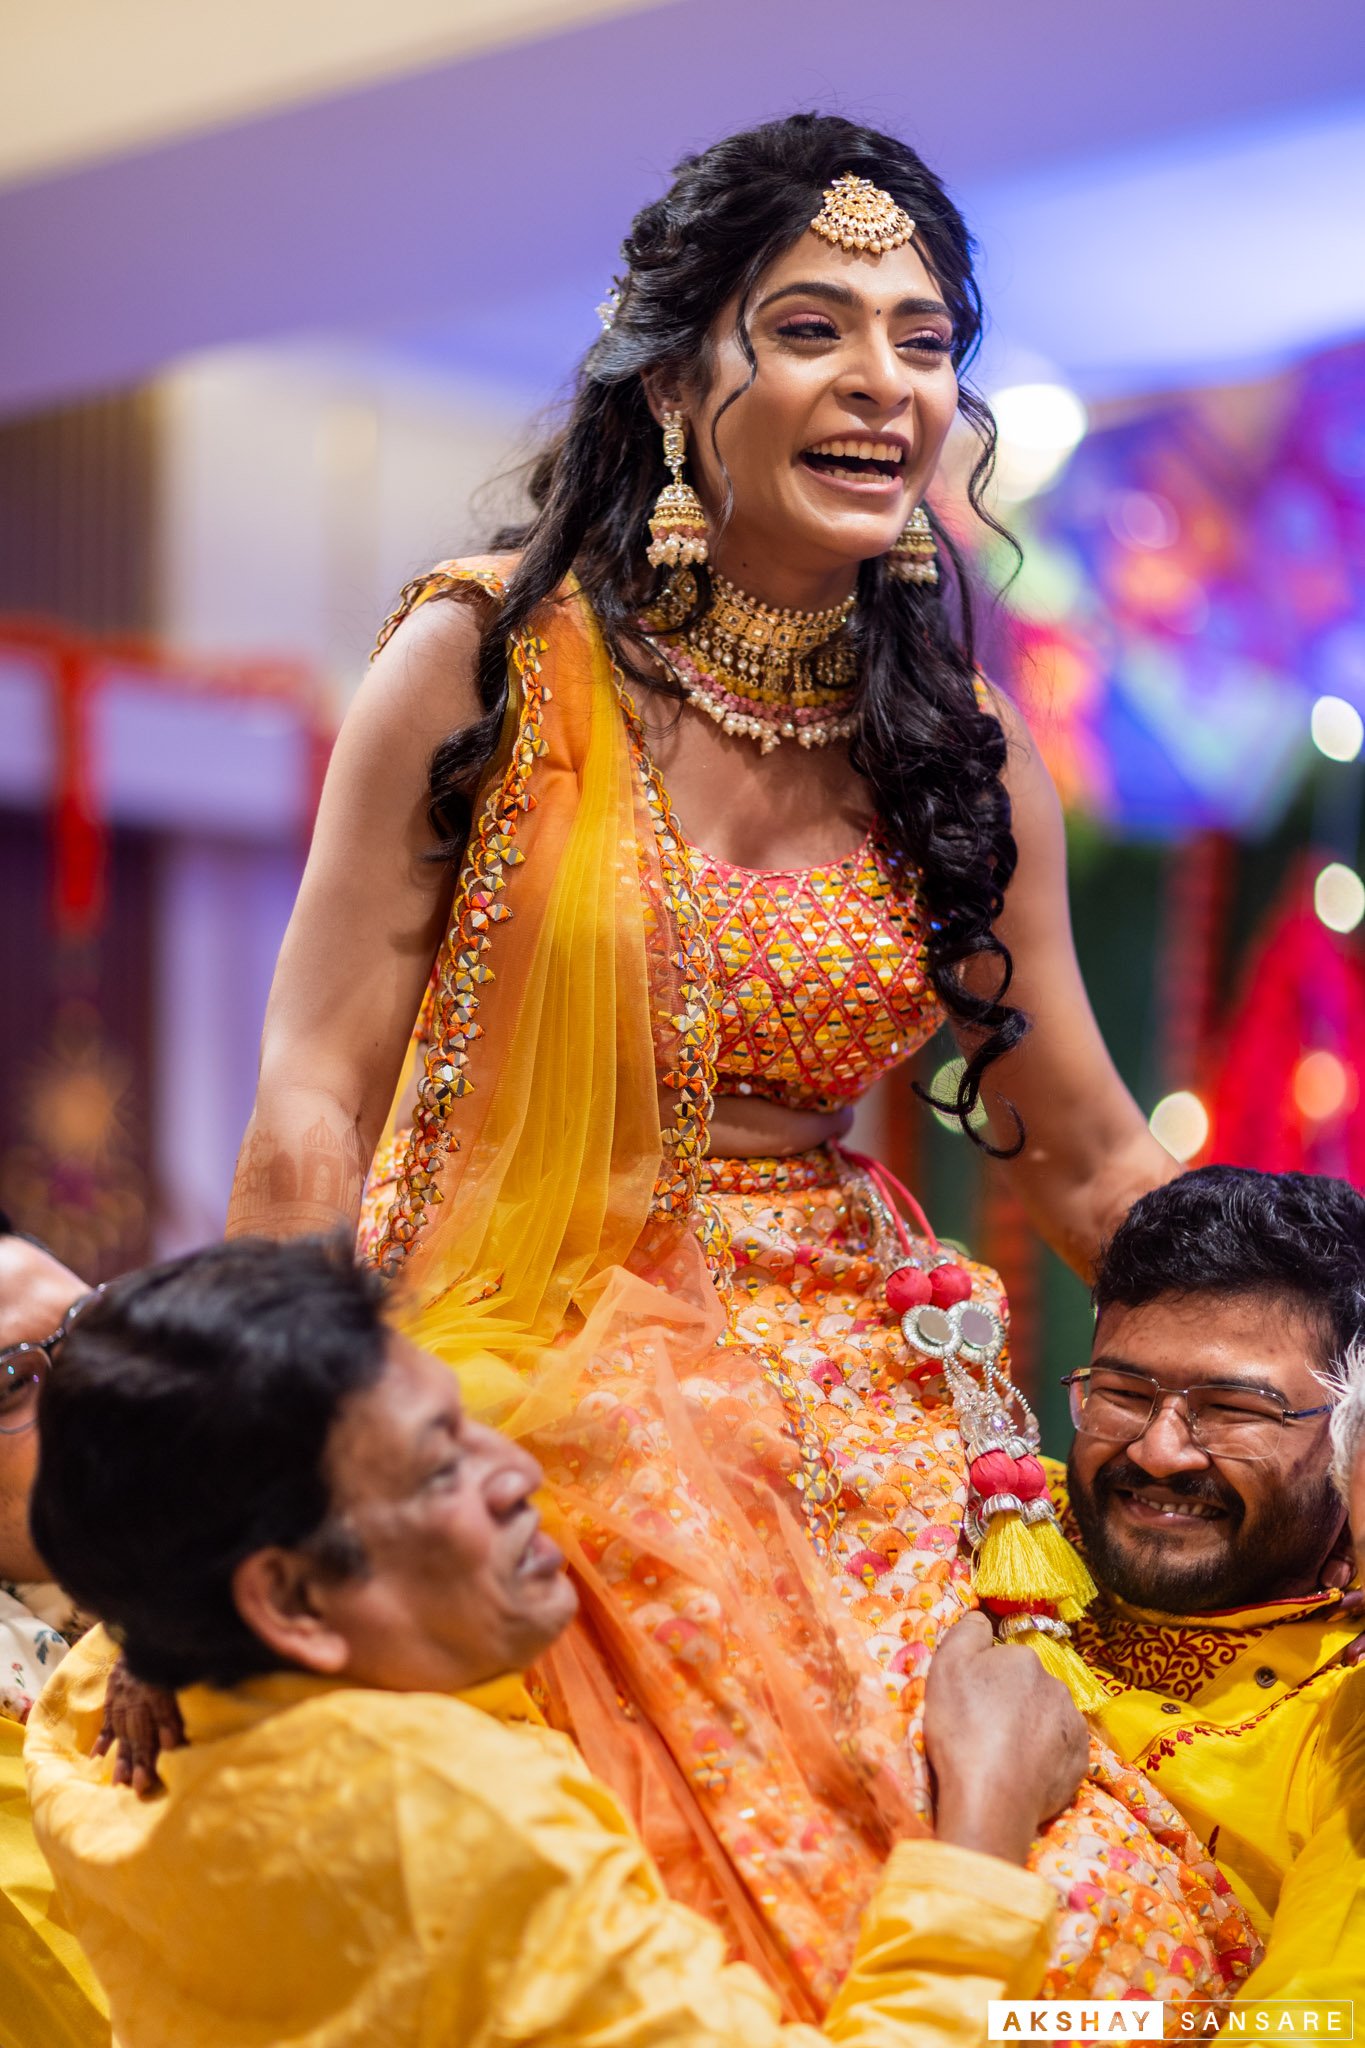 Lipika x Bhavya Compress Akshay Sansare Photography & Films Best wedding photographers in mumbai india-13.jpg